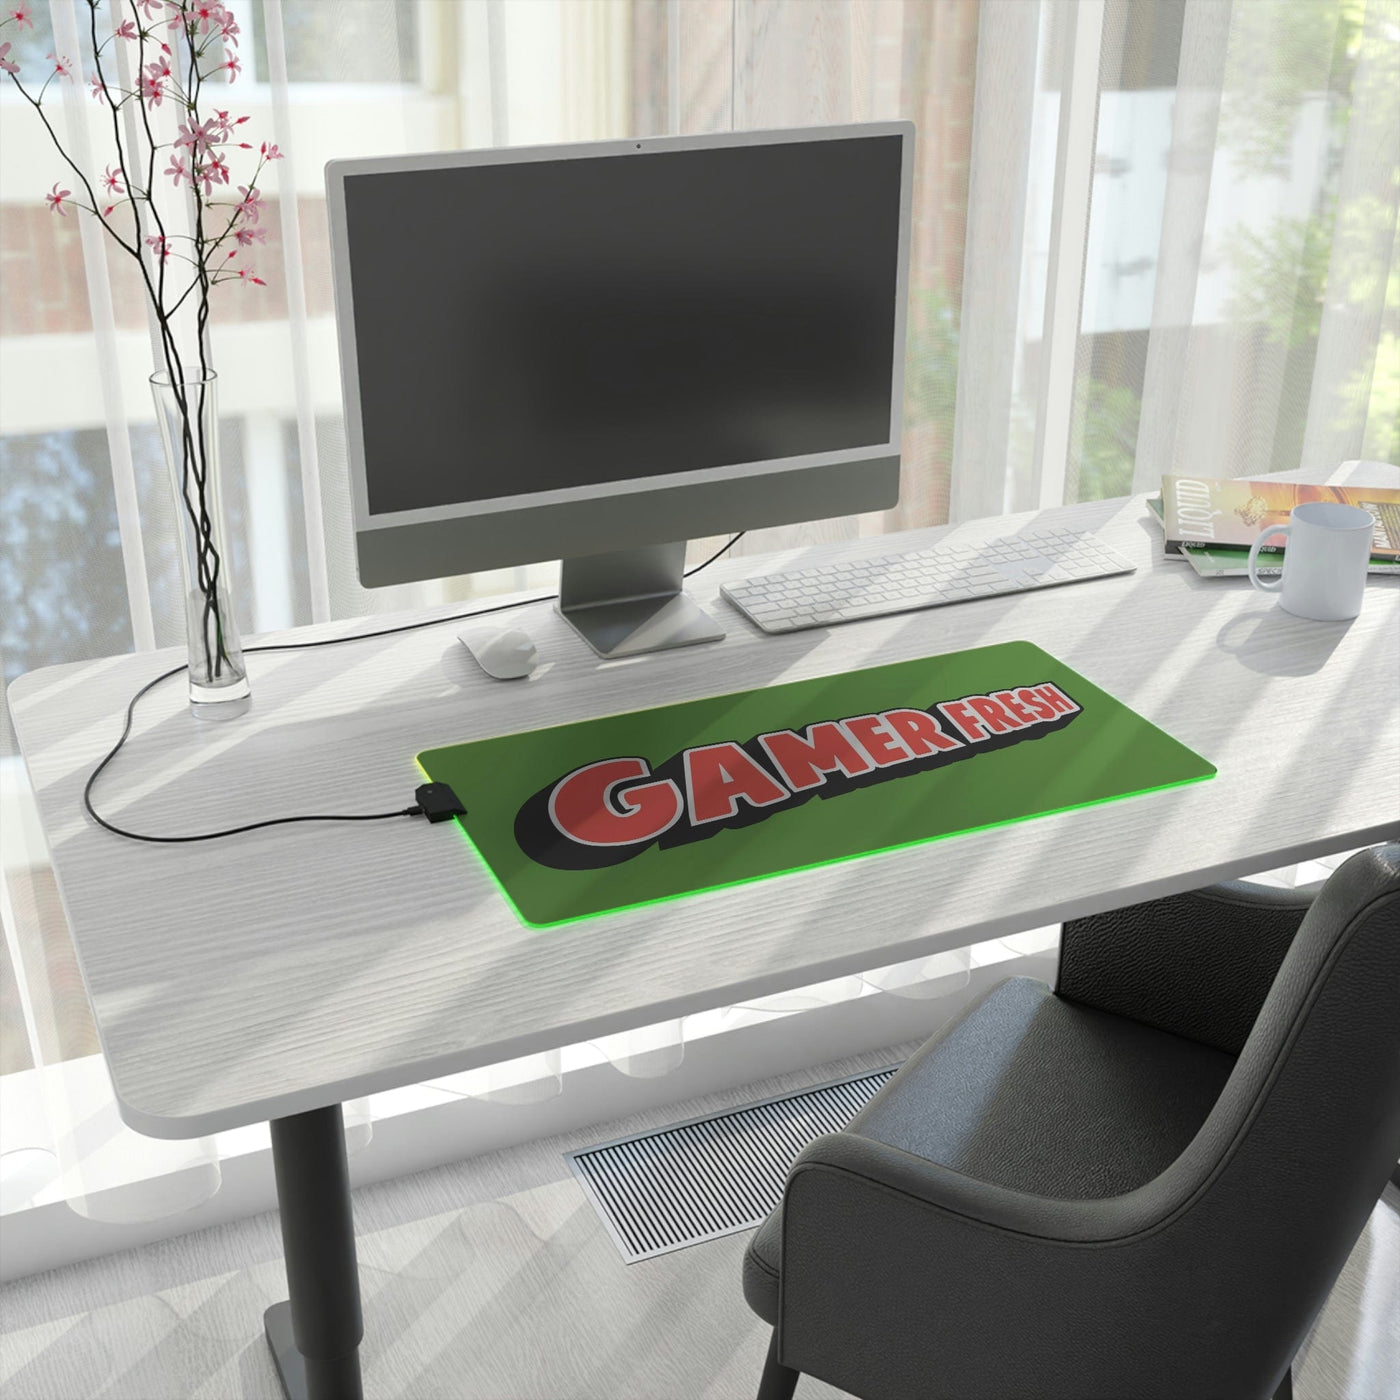 The Gamer Fresh | LED Gaming Computer Desk Mat | Kelly Green